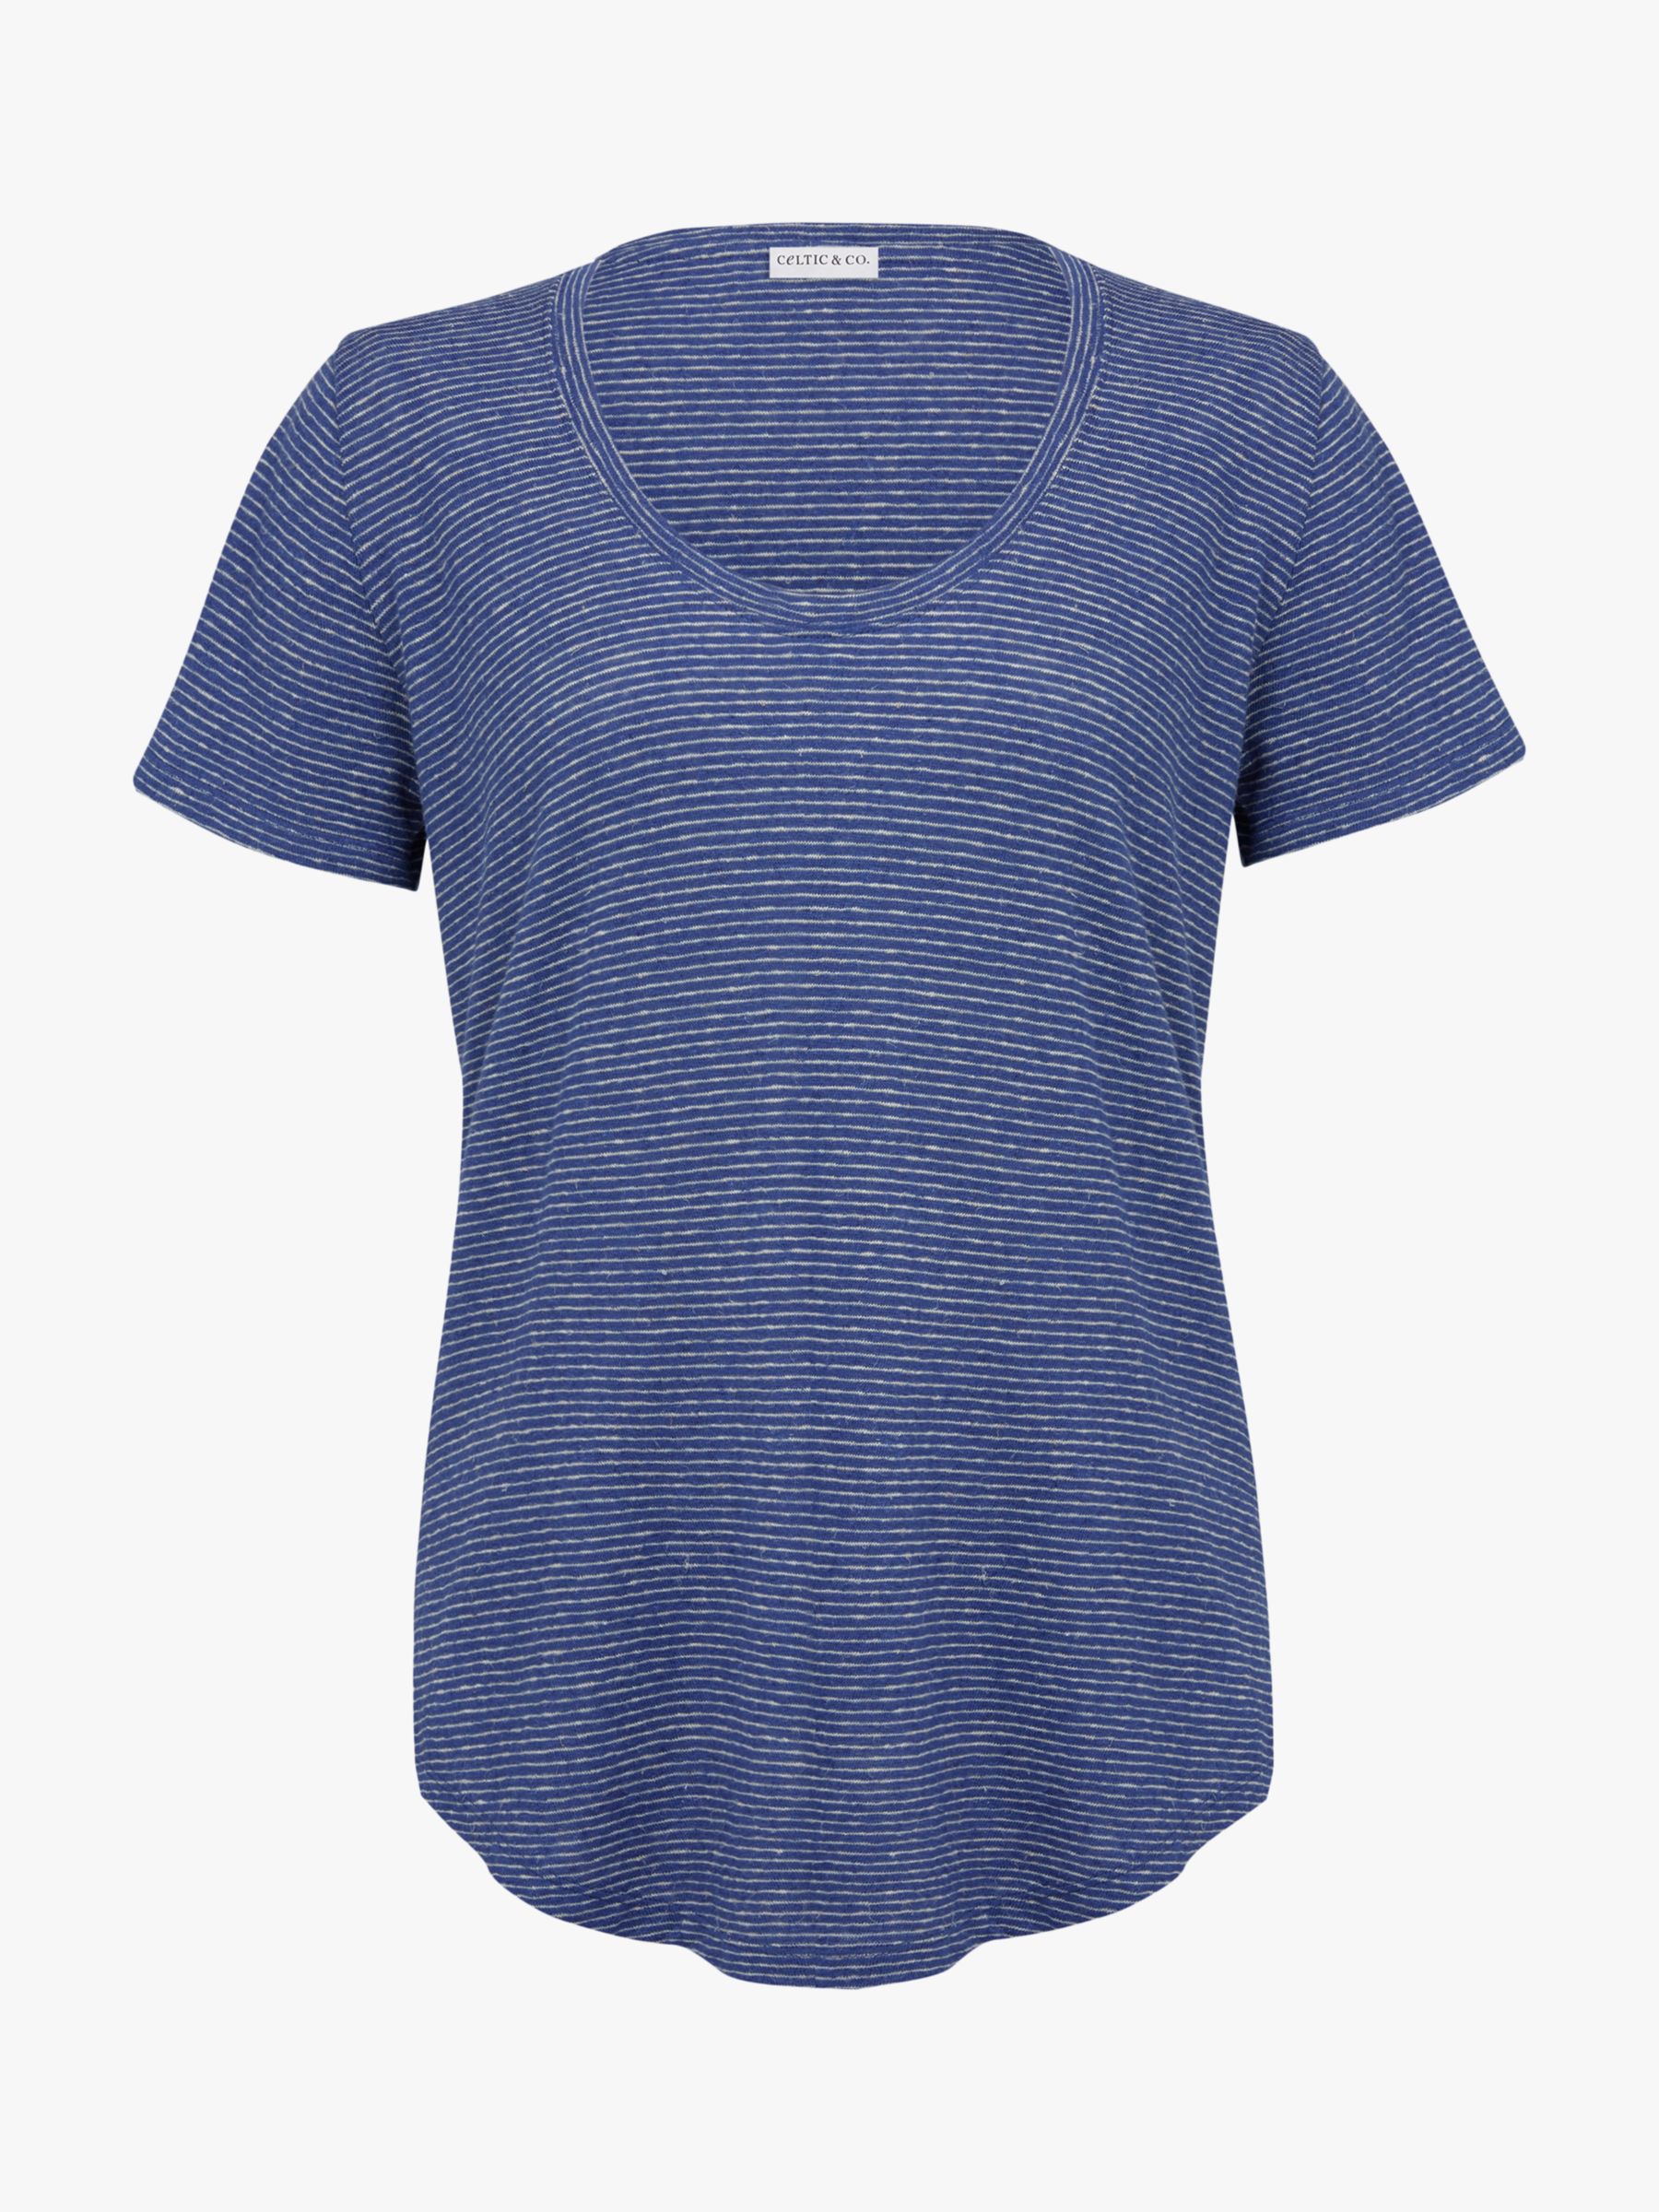 Celtic & Co. Linen Cotton Blend Striped Scoop Neck T-Shirt, Blue Ink ...